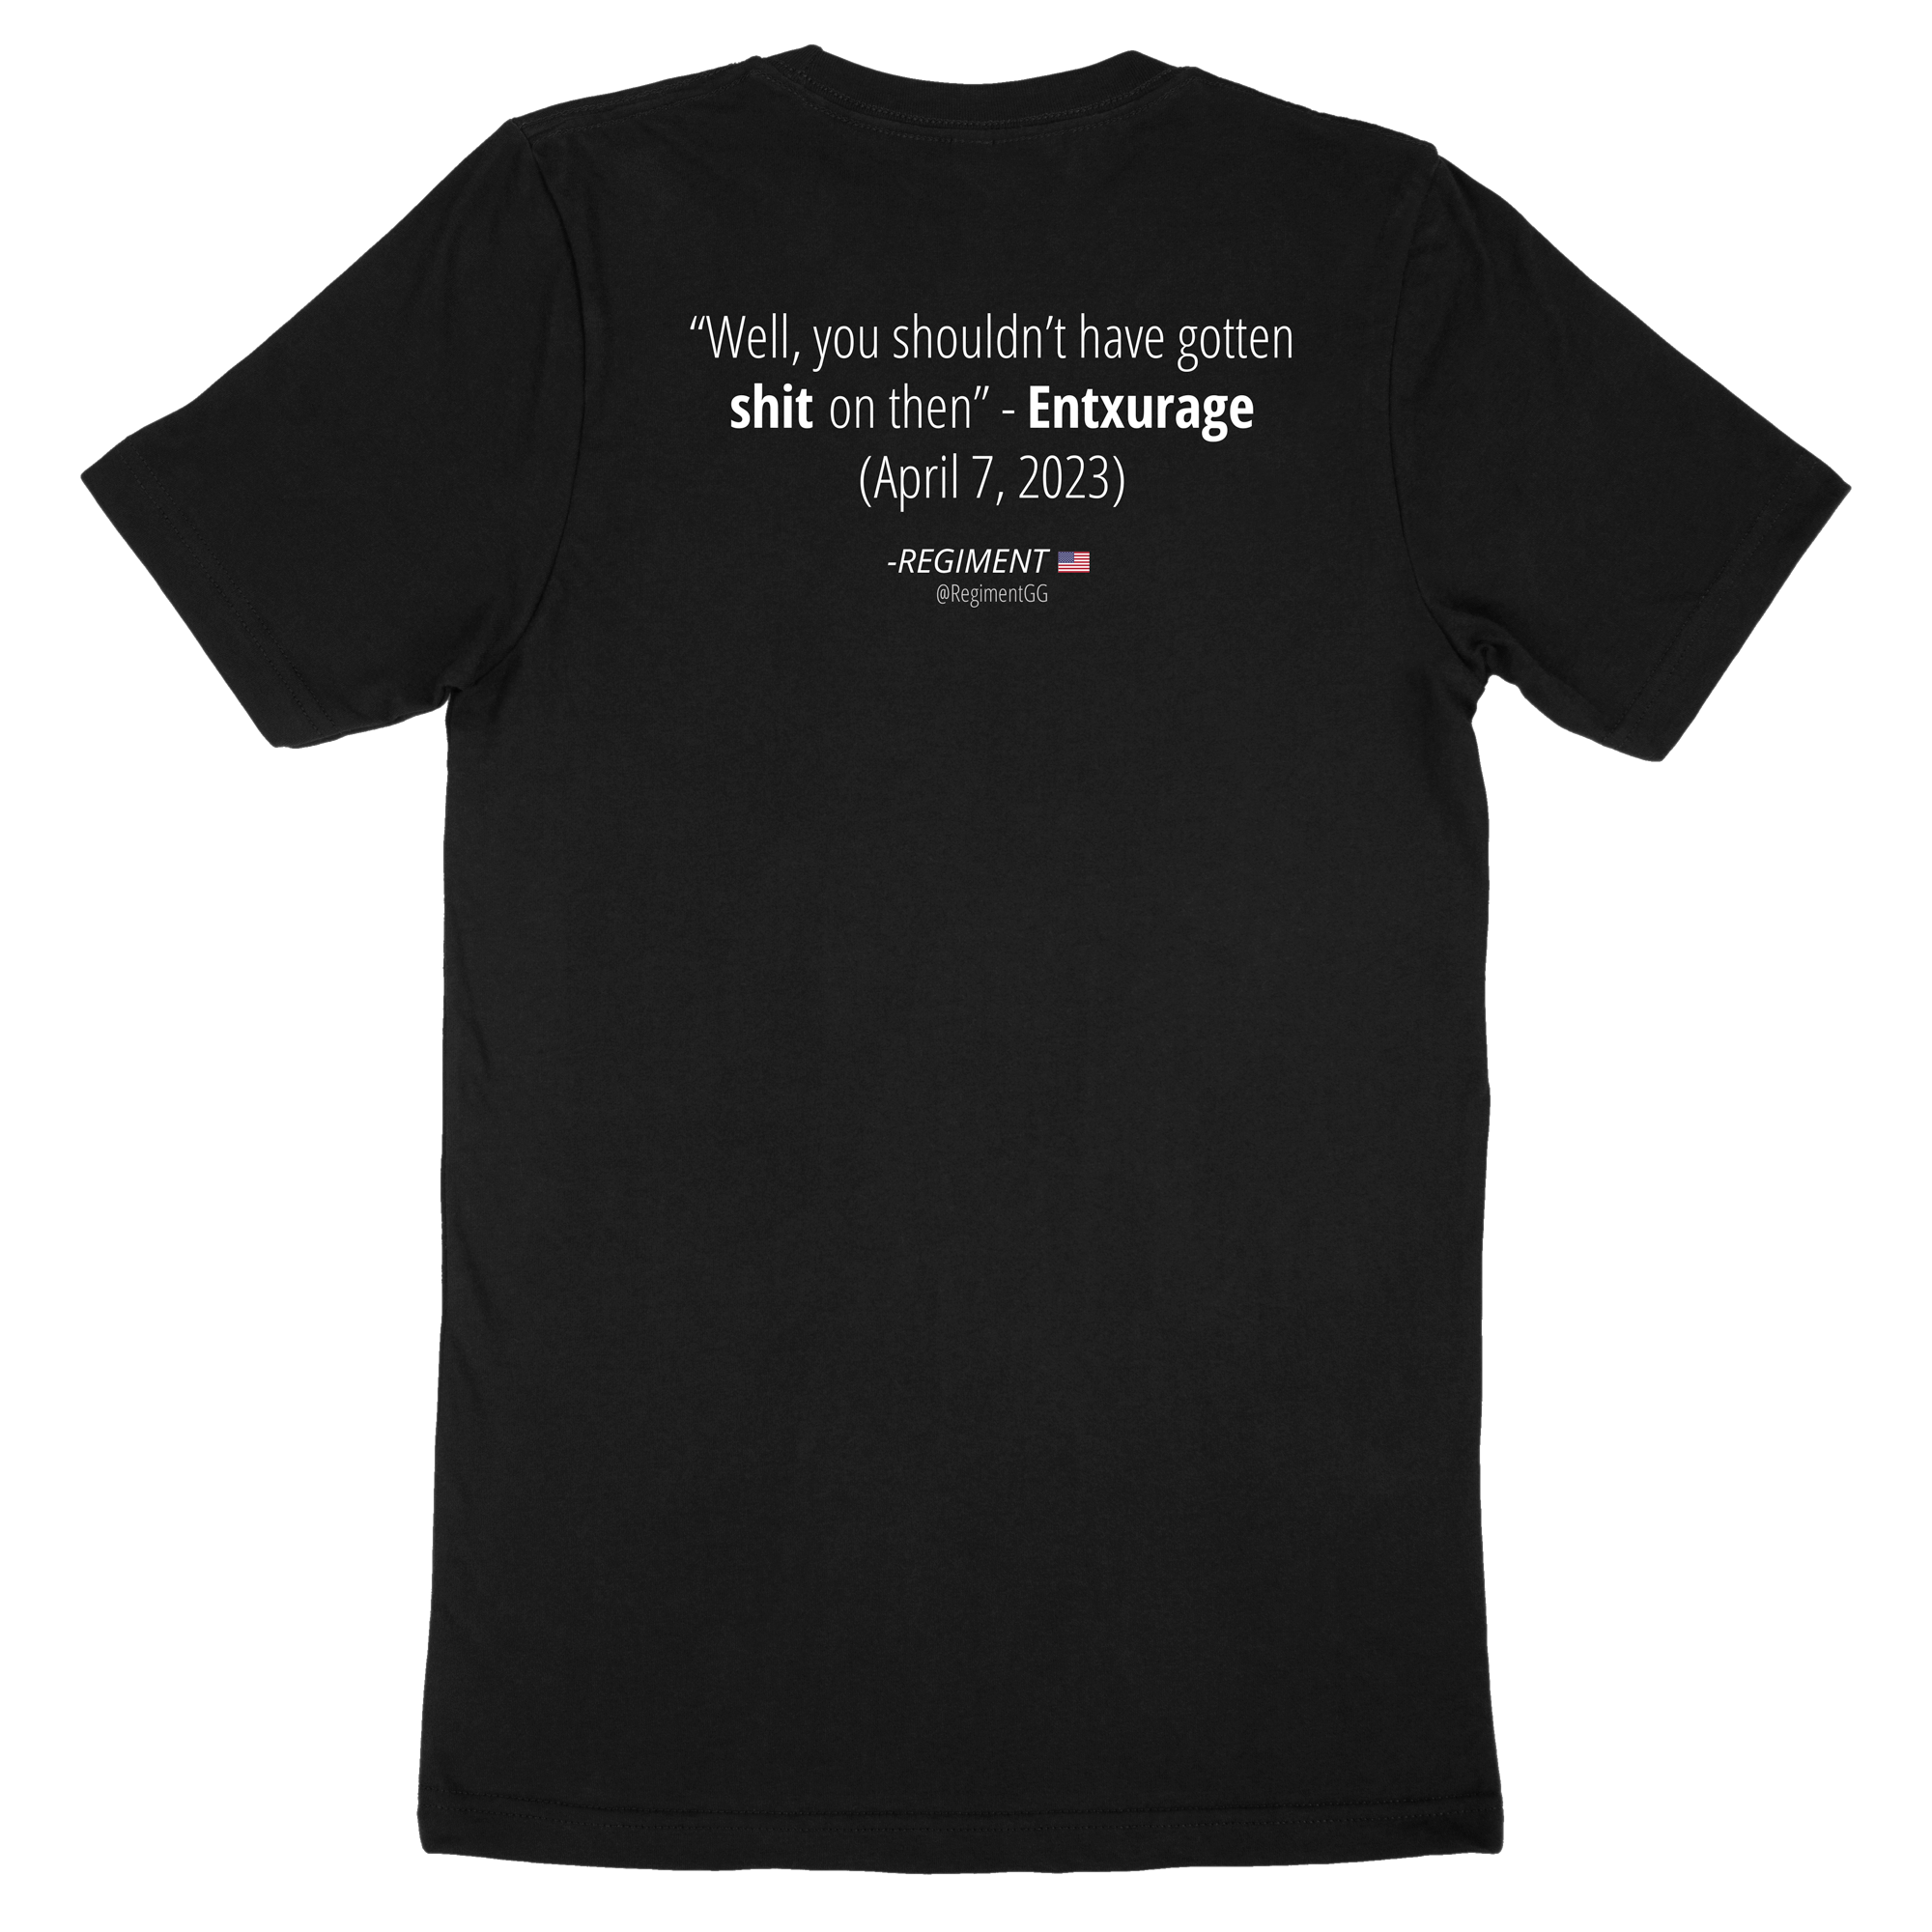 Entxurage’s Get Sh*t on T-Shirt